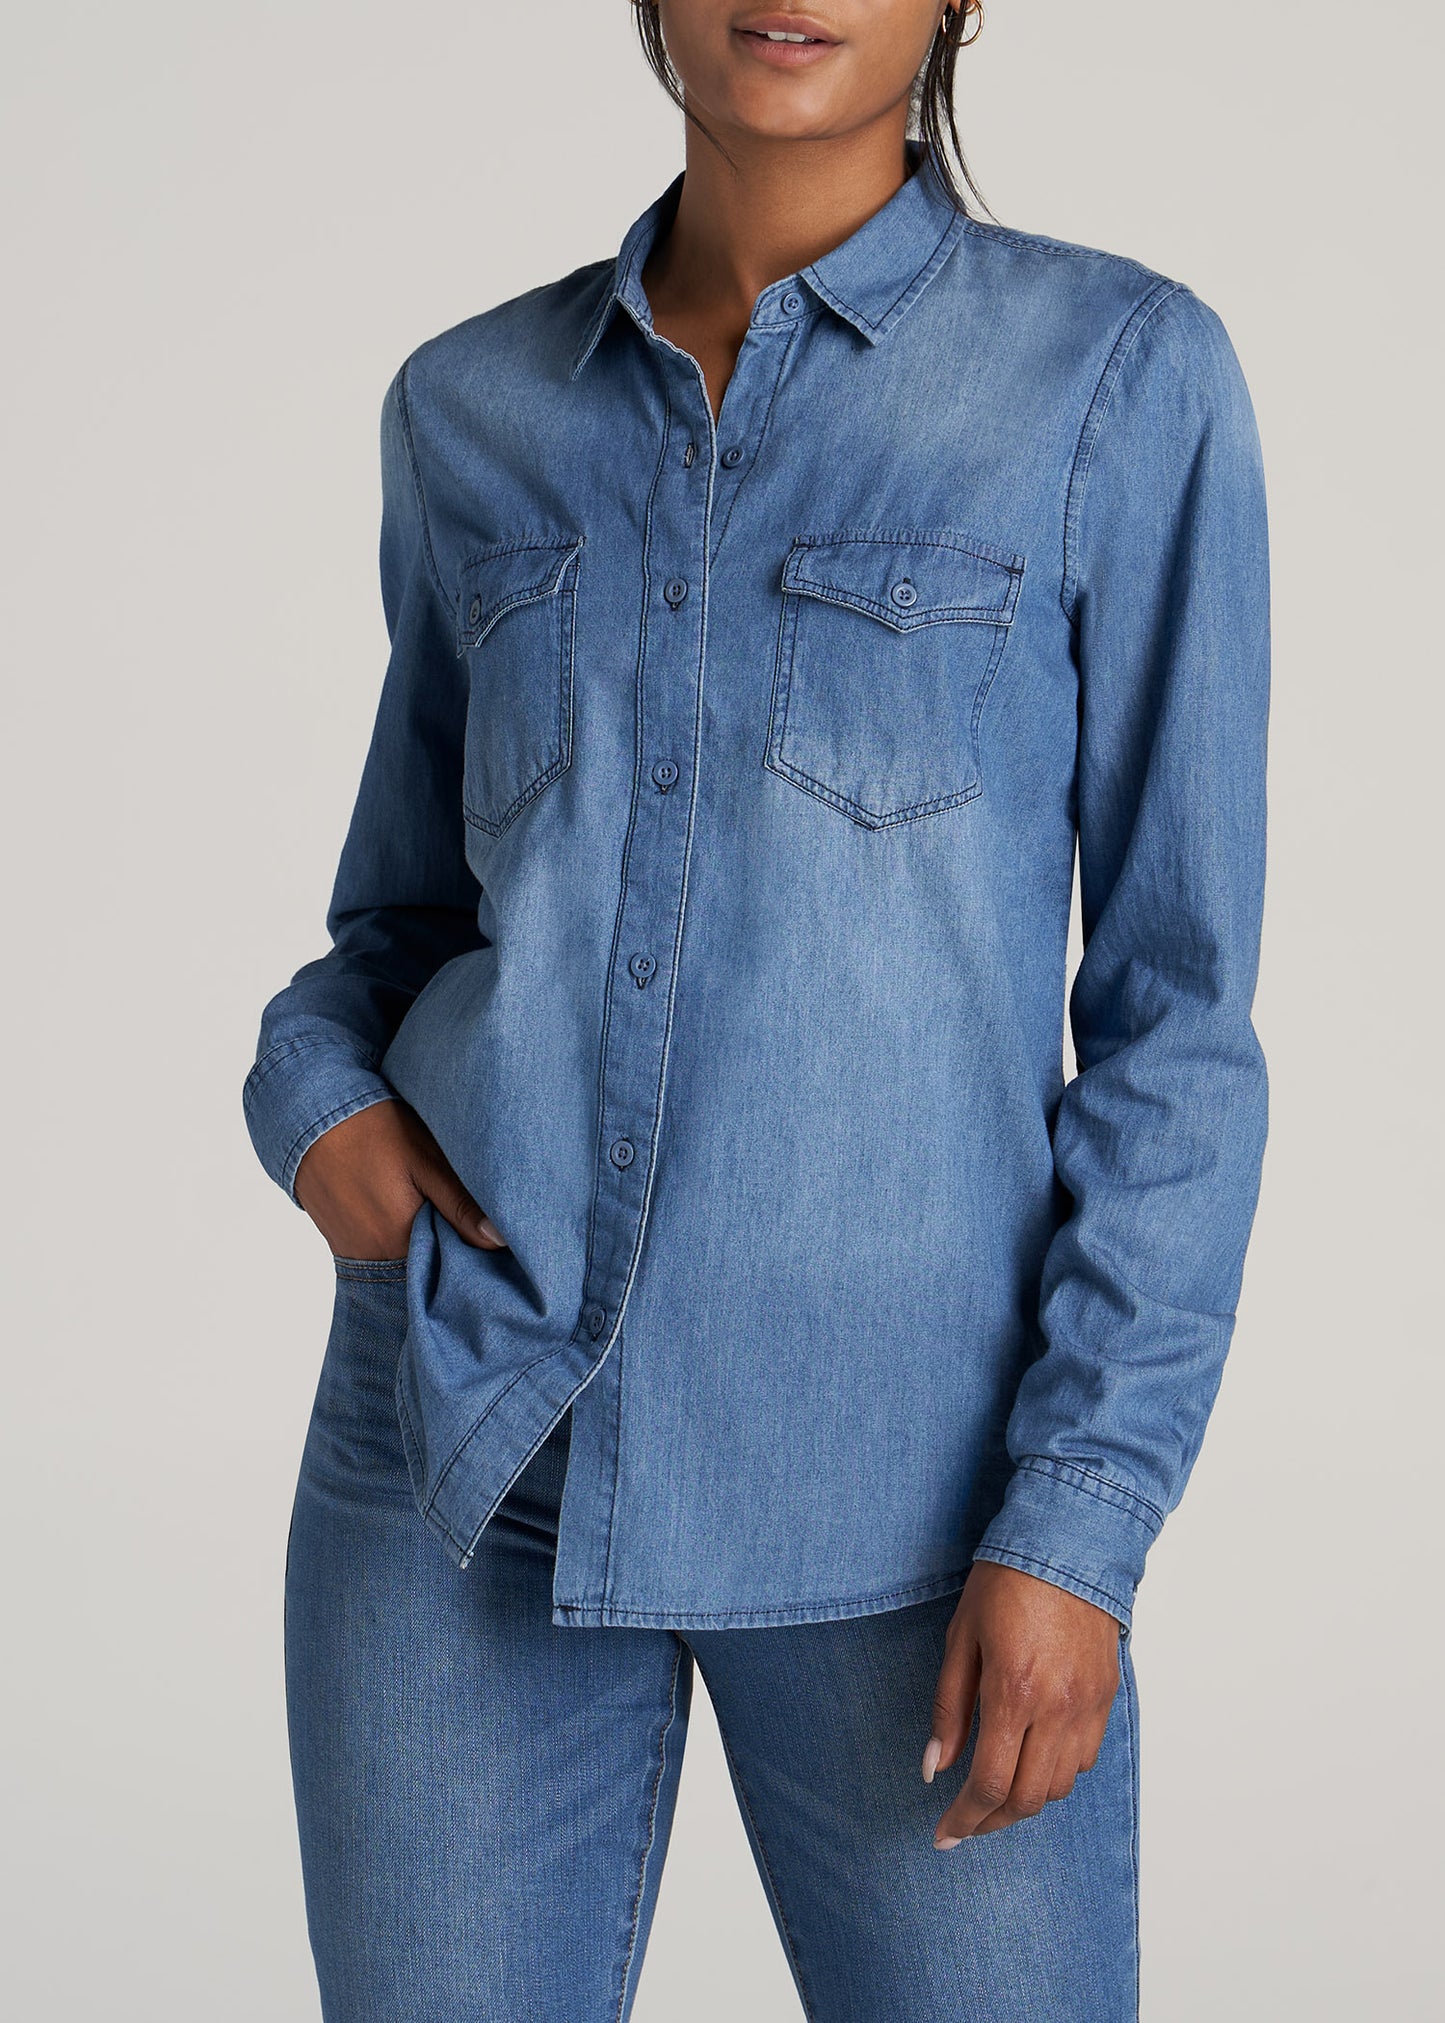 NEW Womens Denim Shirt Ladies Classic Fitted Shirts Size 8 10 12 14 Blue  Jeans Dark Blue XL